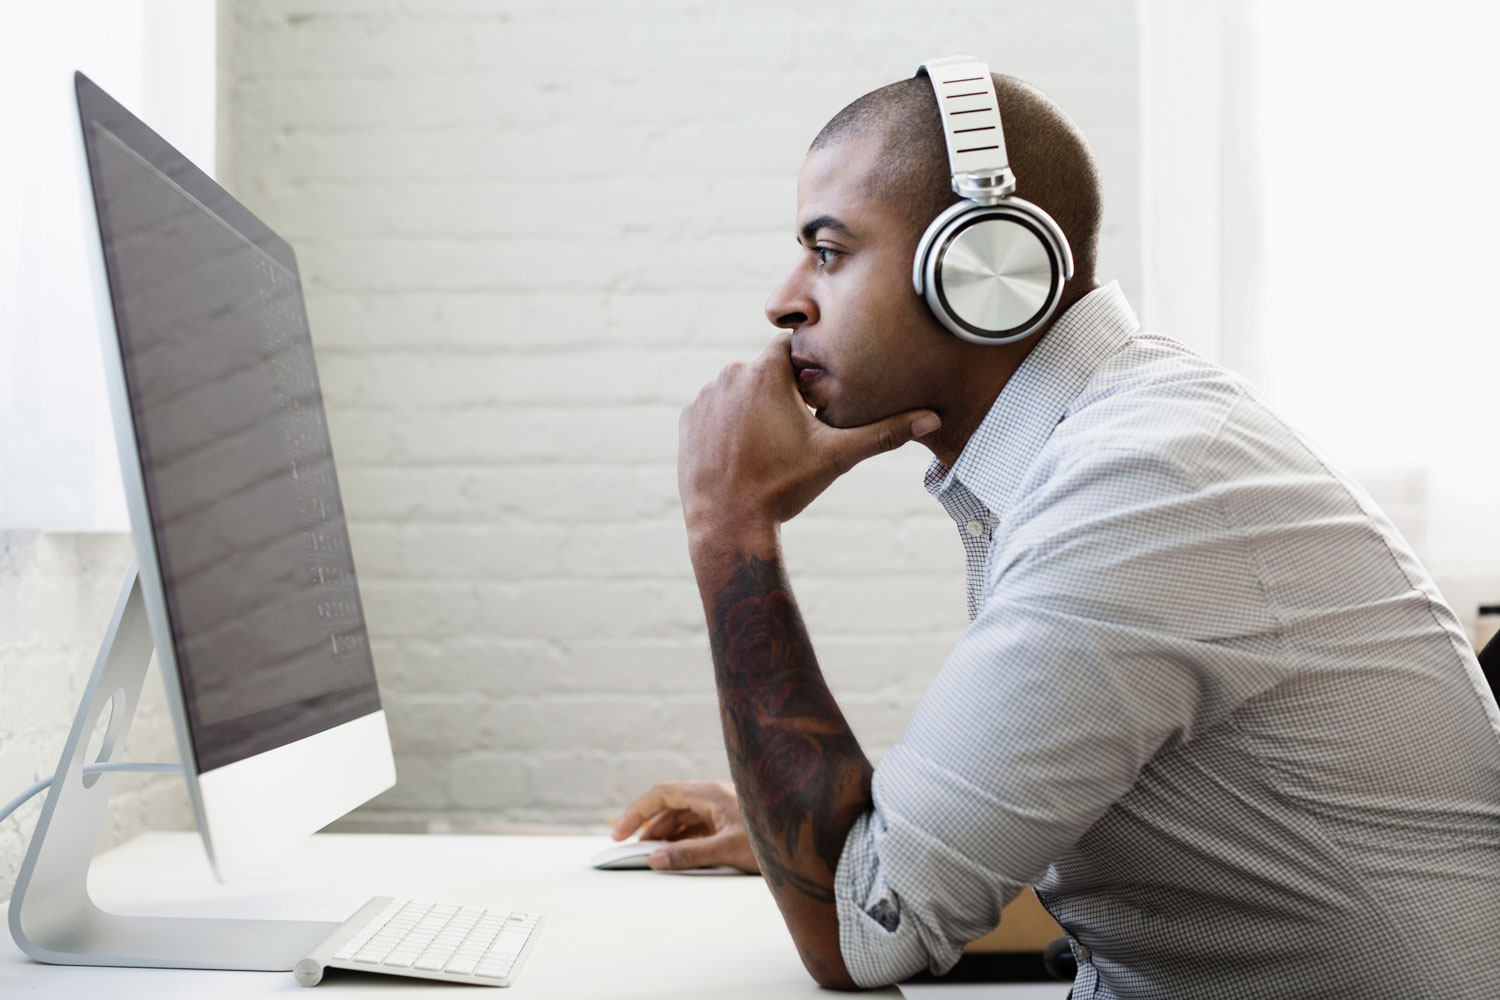 Man wearing headphones using a Mac computer